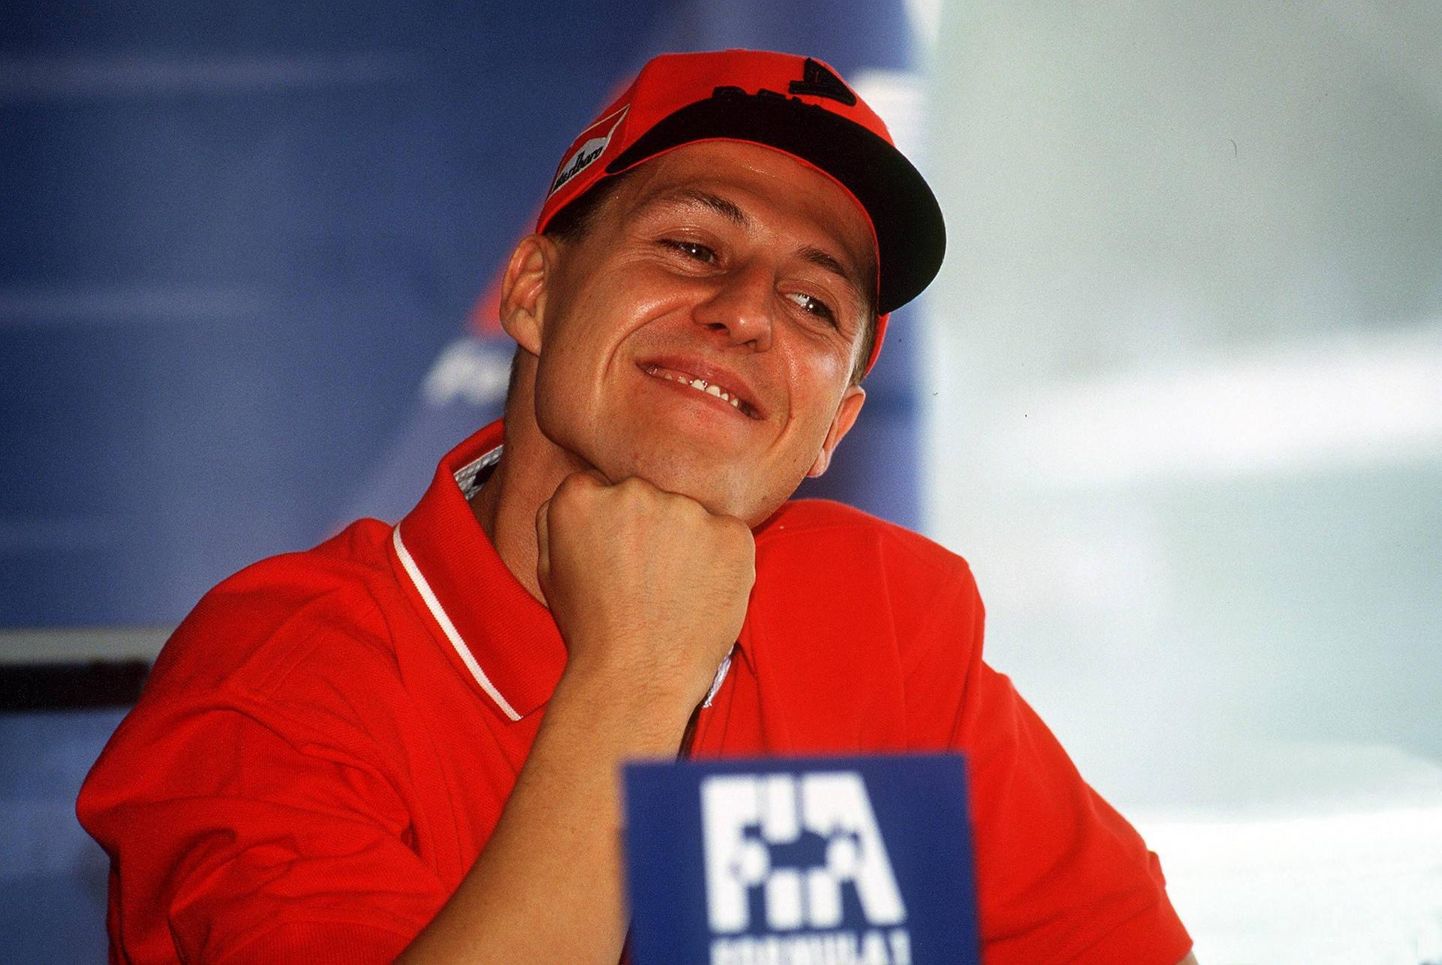 Kas Michael Schumacher tajub ja mõistab laste edusamme? FOTO: Imago/Sven Simon/Scanpix